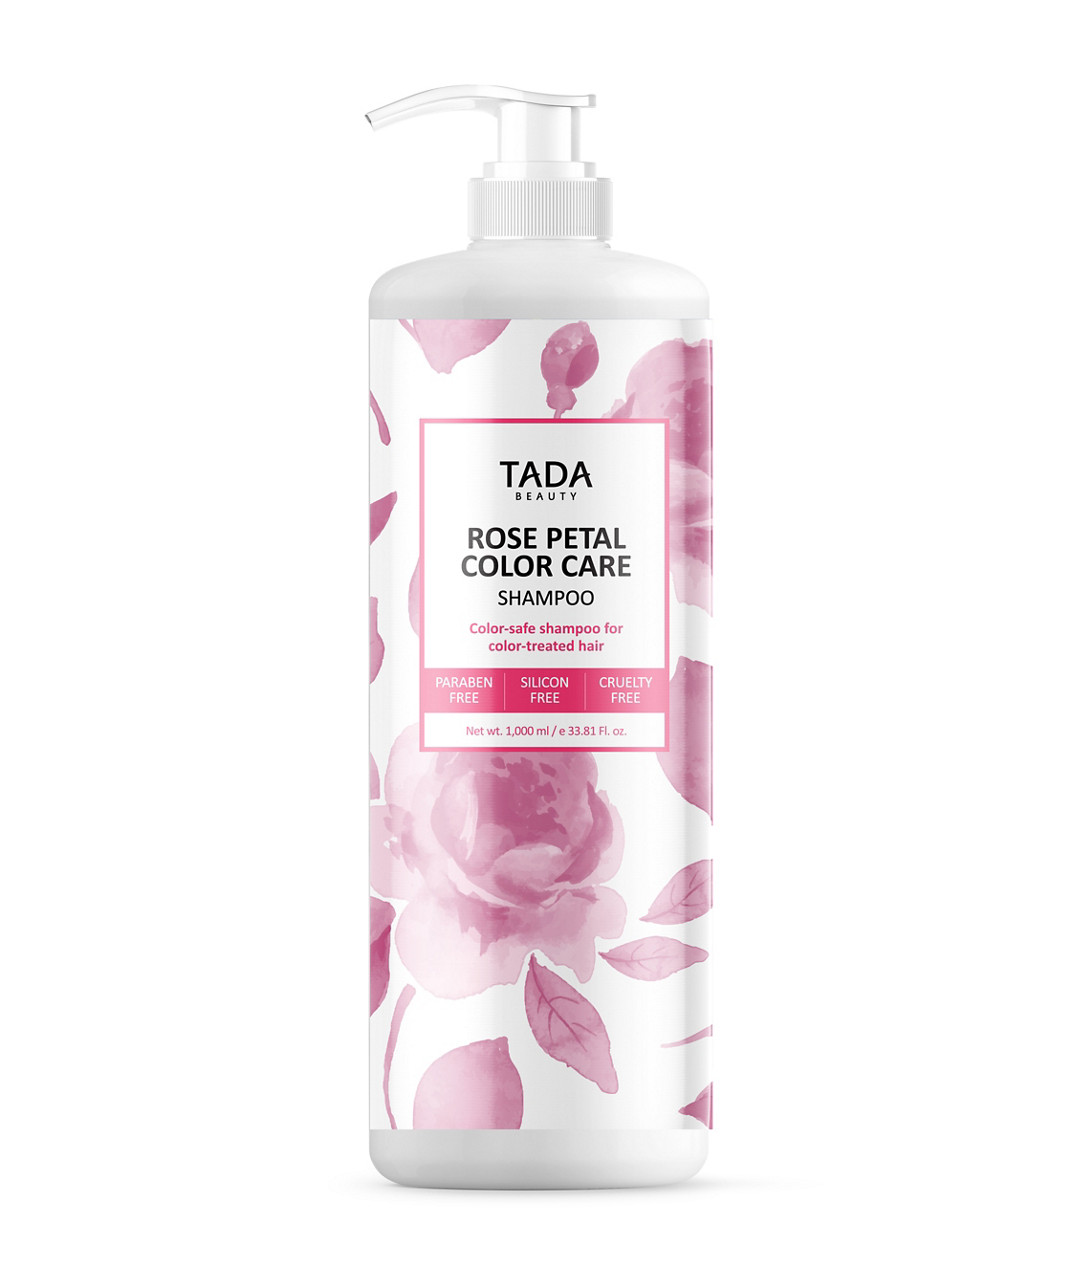 Tada Beauty Rose Petal Color Care Shampoo, 33.8 fl. oz.